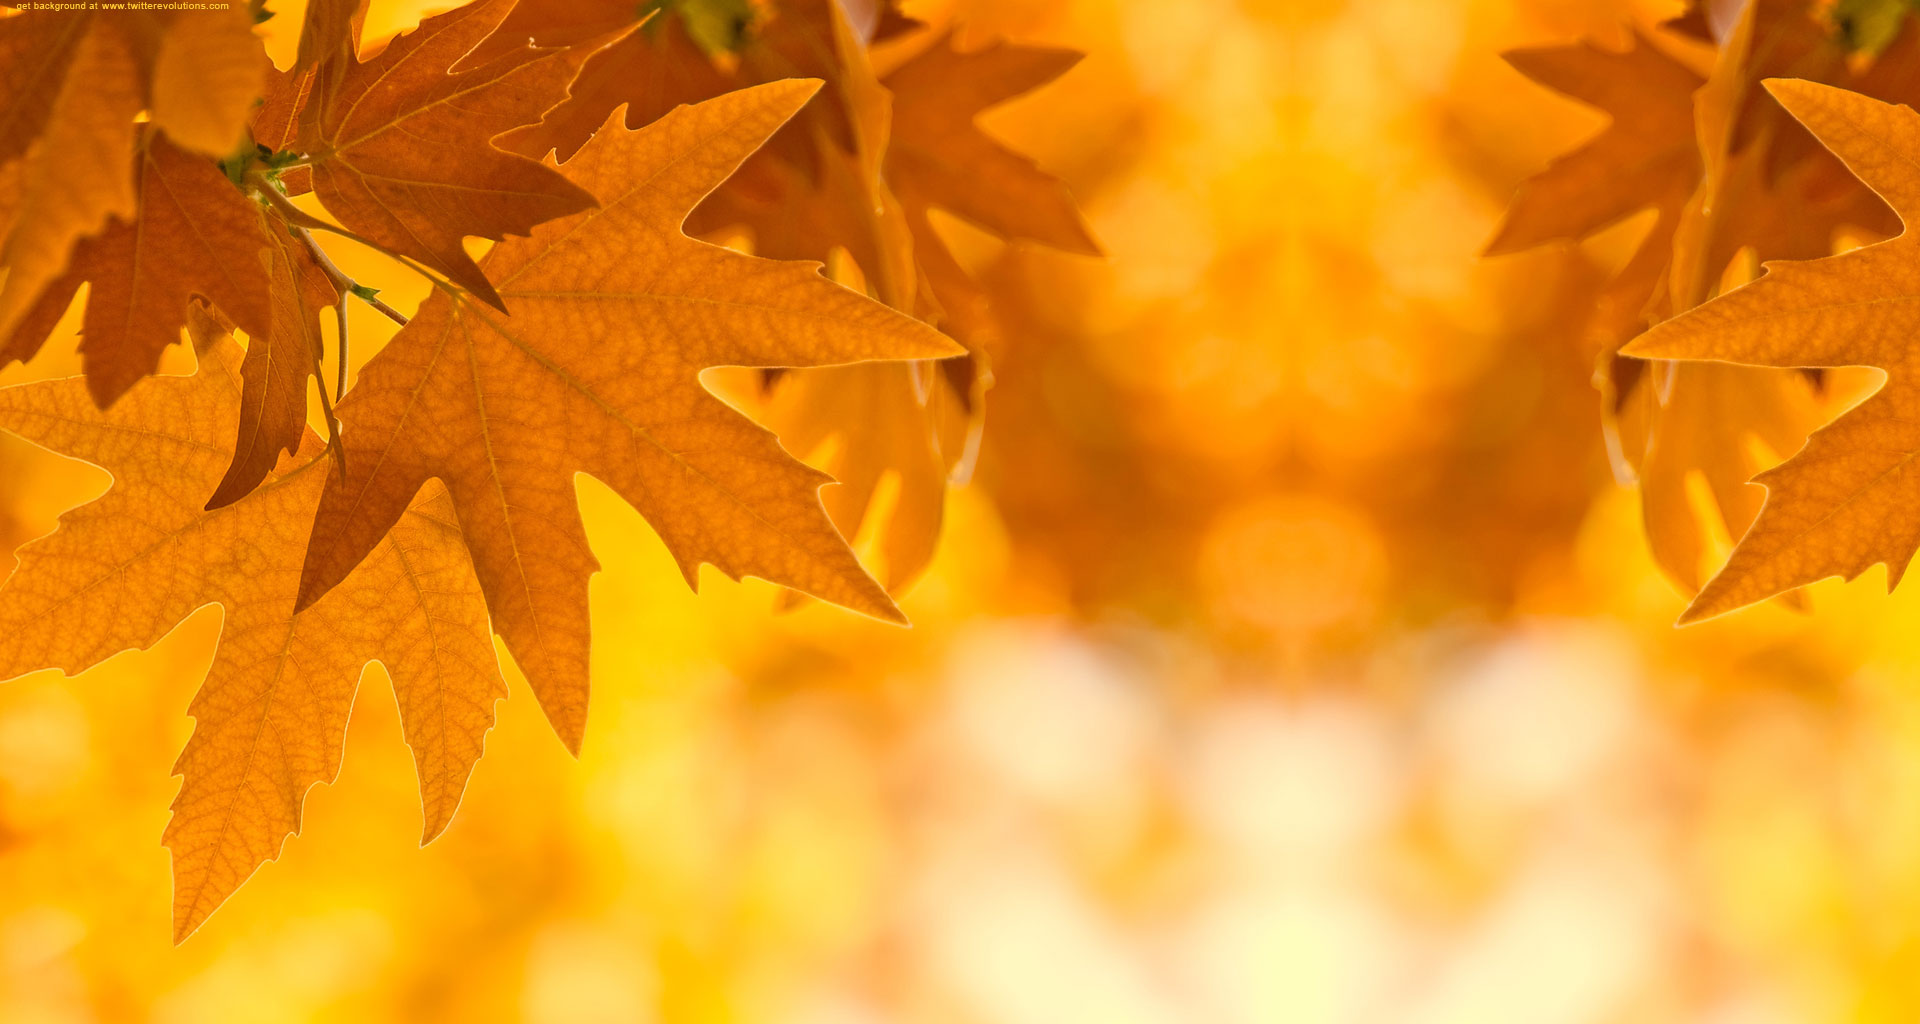 Autumn Images Backgrounds